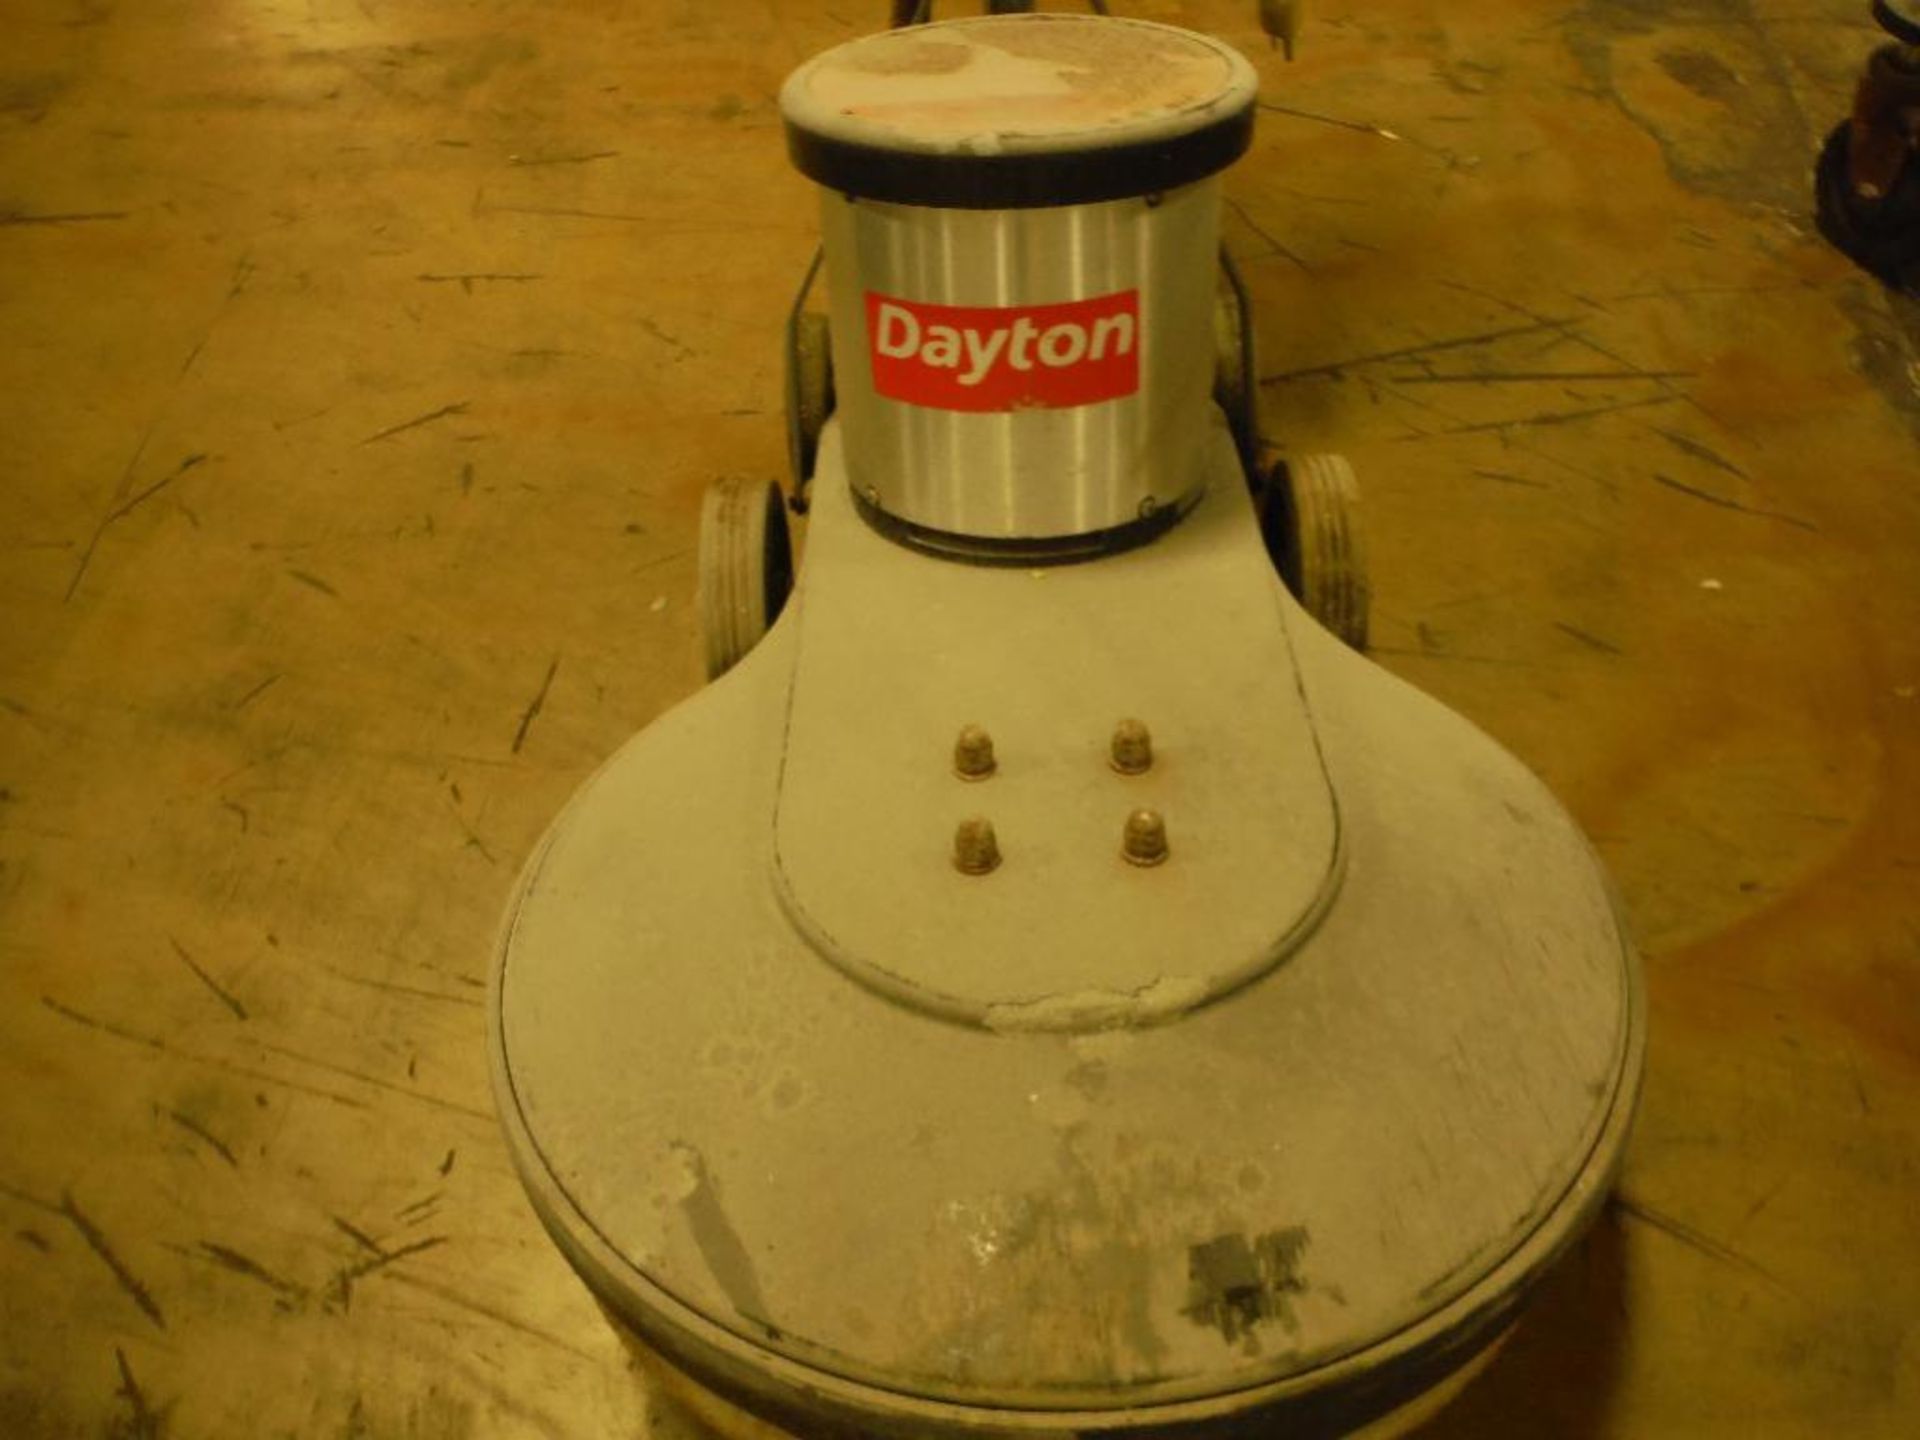 Dayton floor polisher. Rigging Fee: $25 - Image 2 of 3